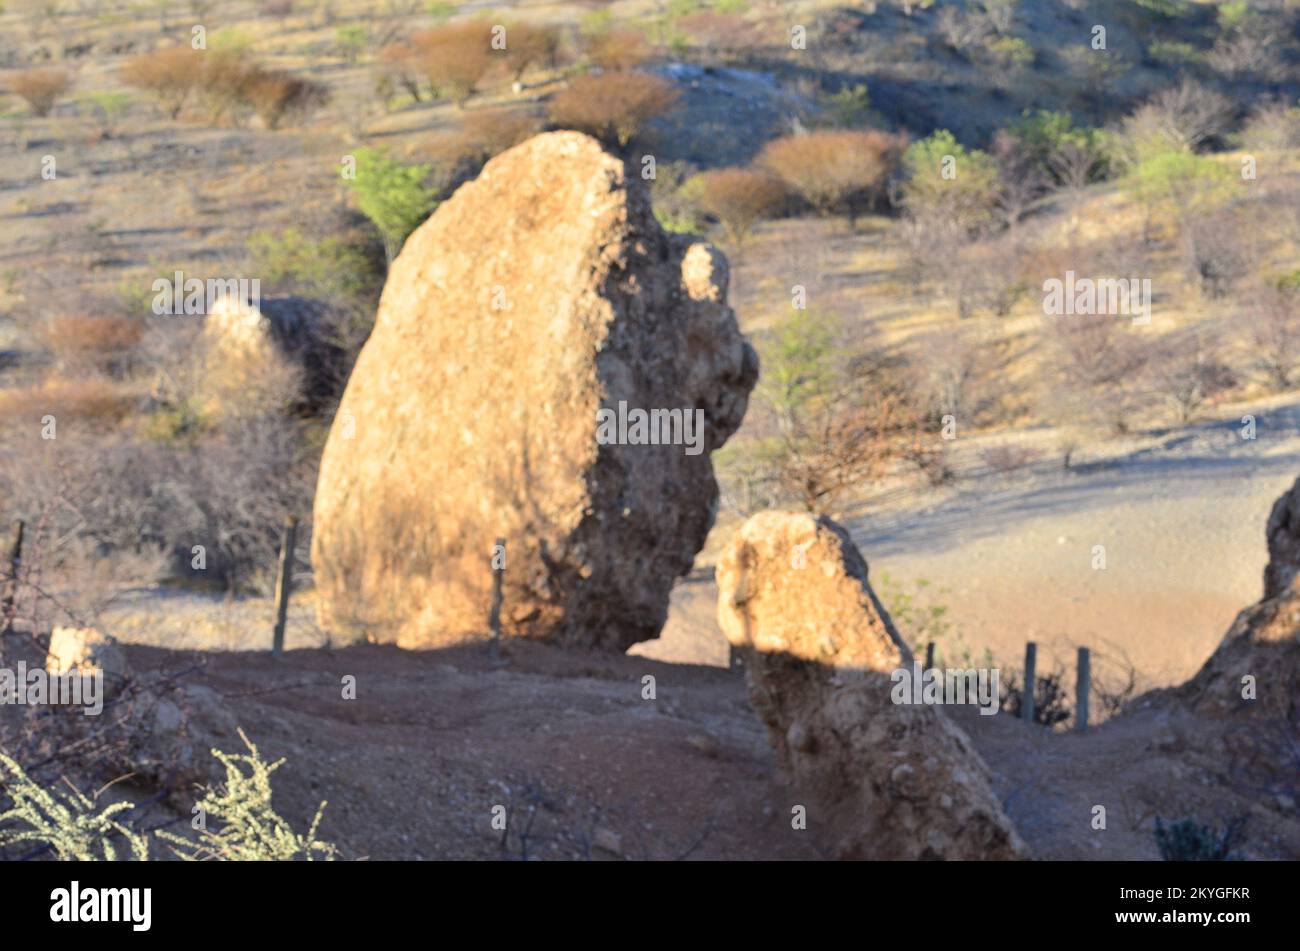 Vingerklip alta roccia in darmaland namibia Africa Foto Stock